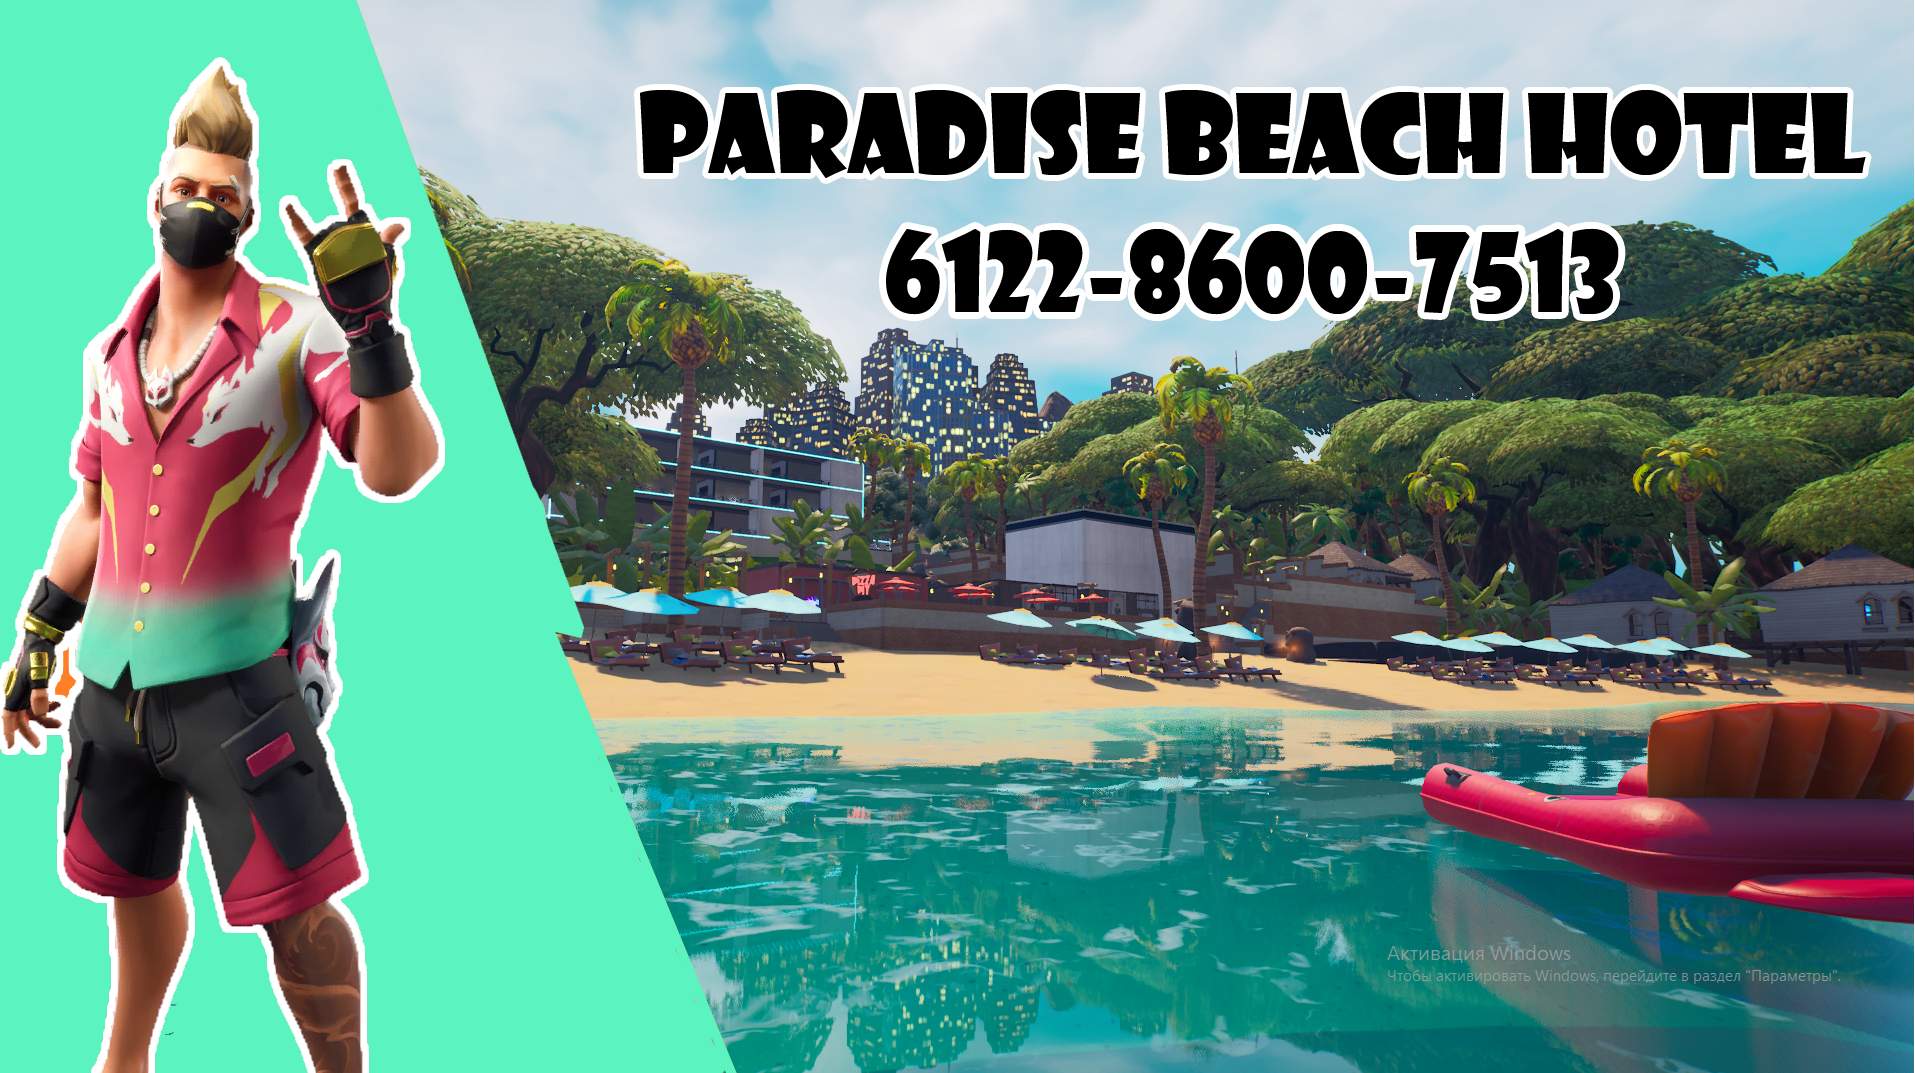 Paradise beach hotel